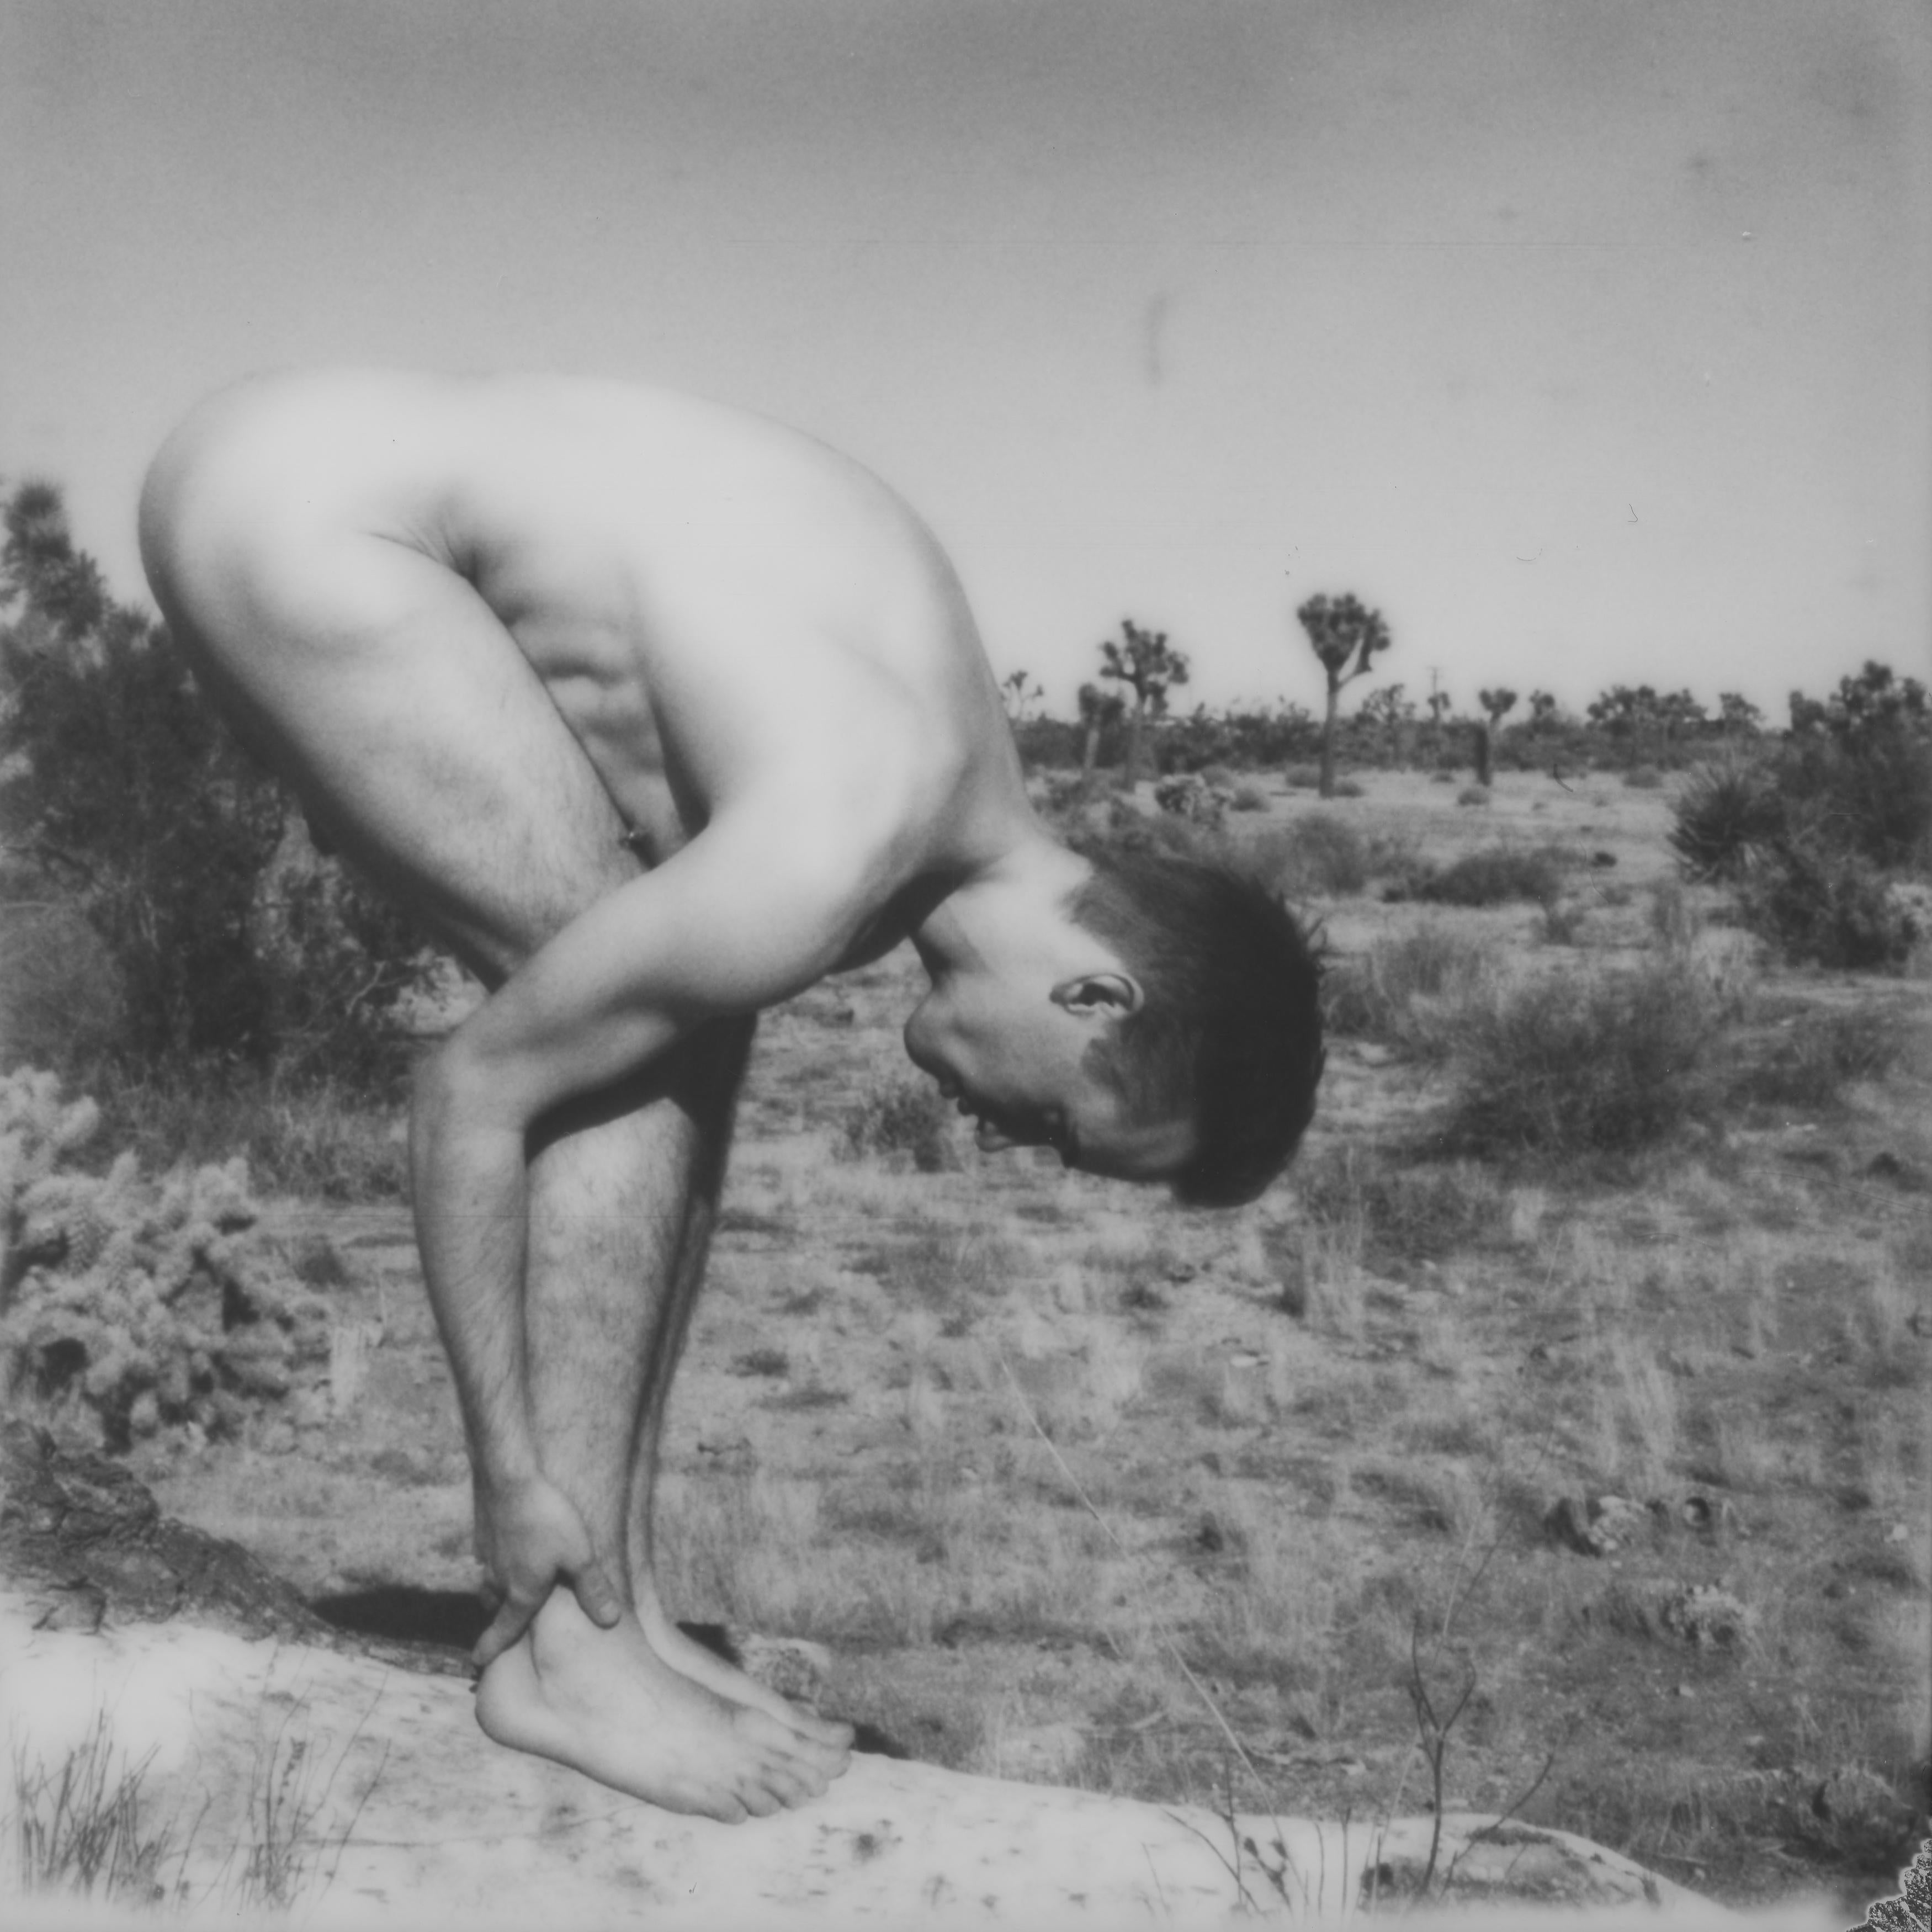 Take a Stand - Contemporary, Polaroid, Nude, 21st Century, Joshua Tree